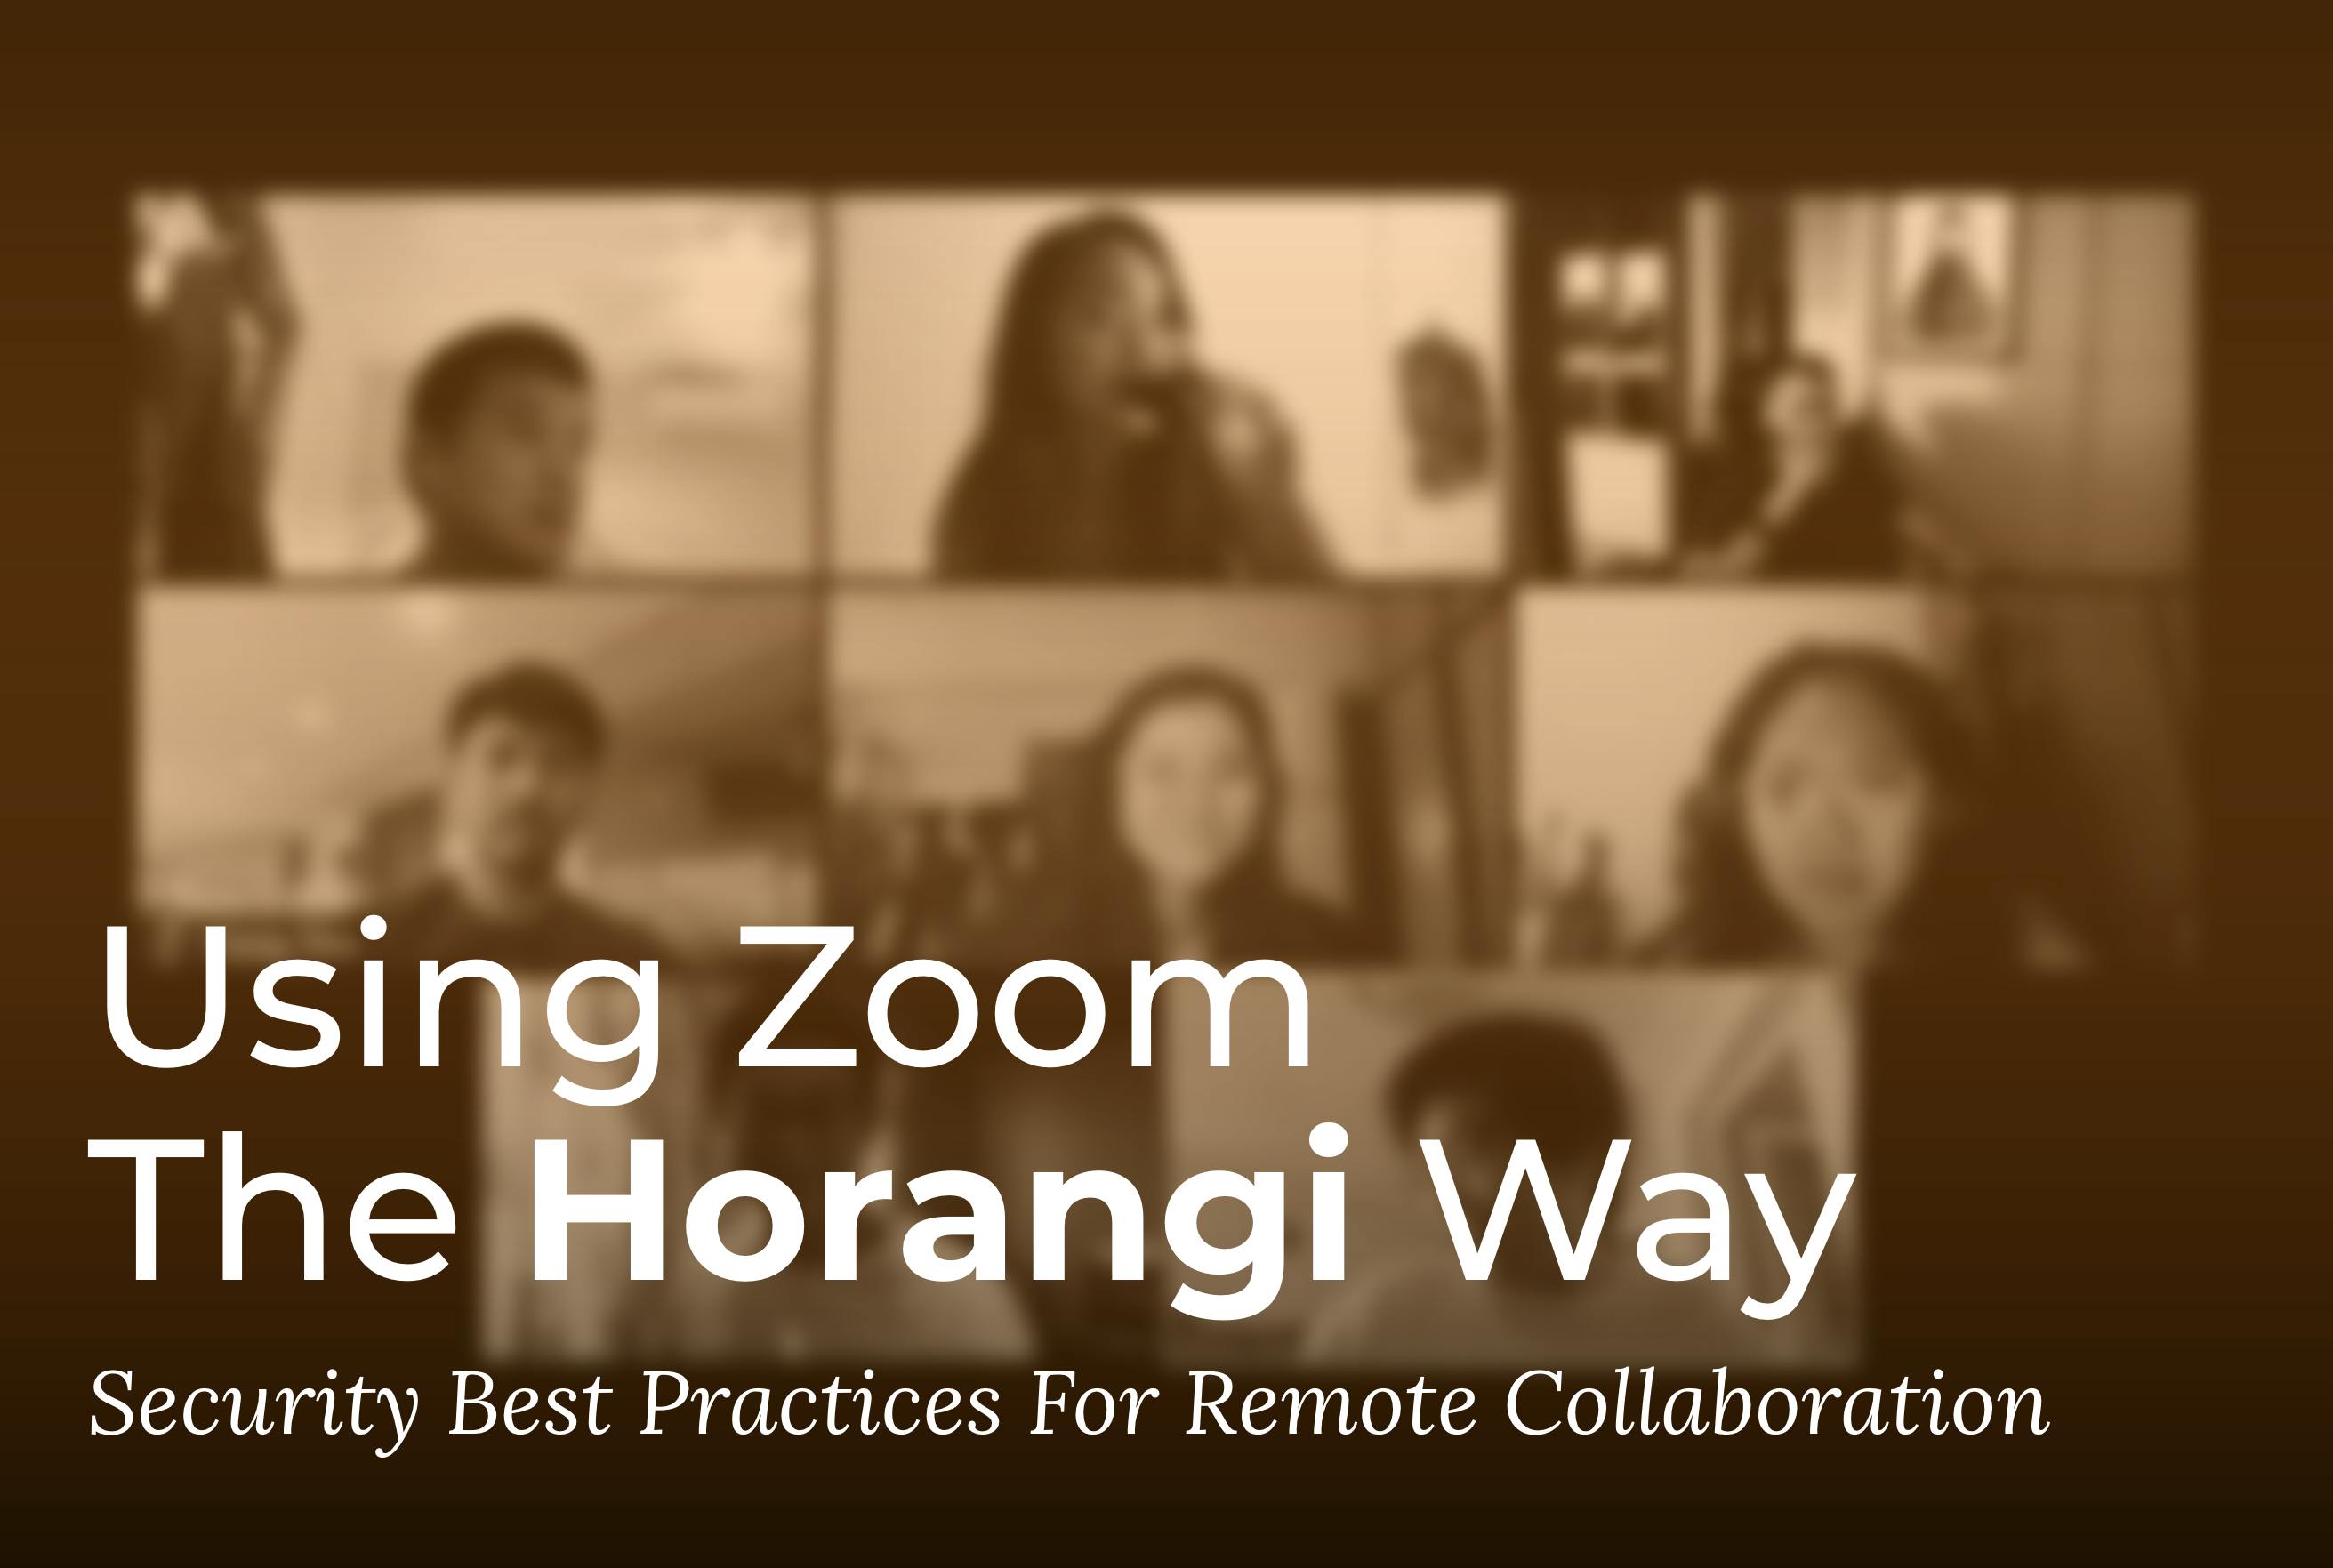 Using Zoom The Horangi Way: Security Best Practices